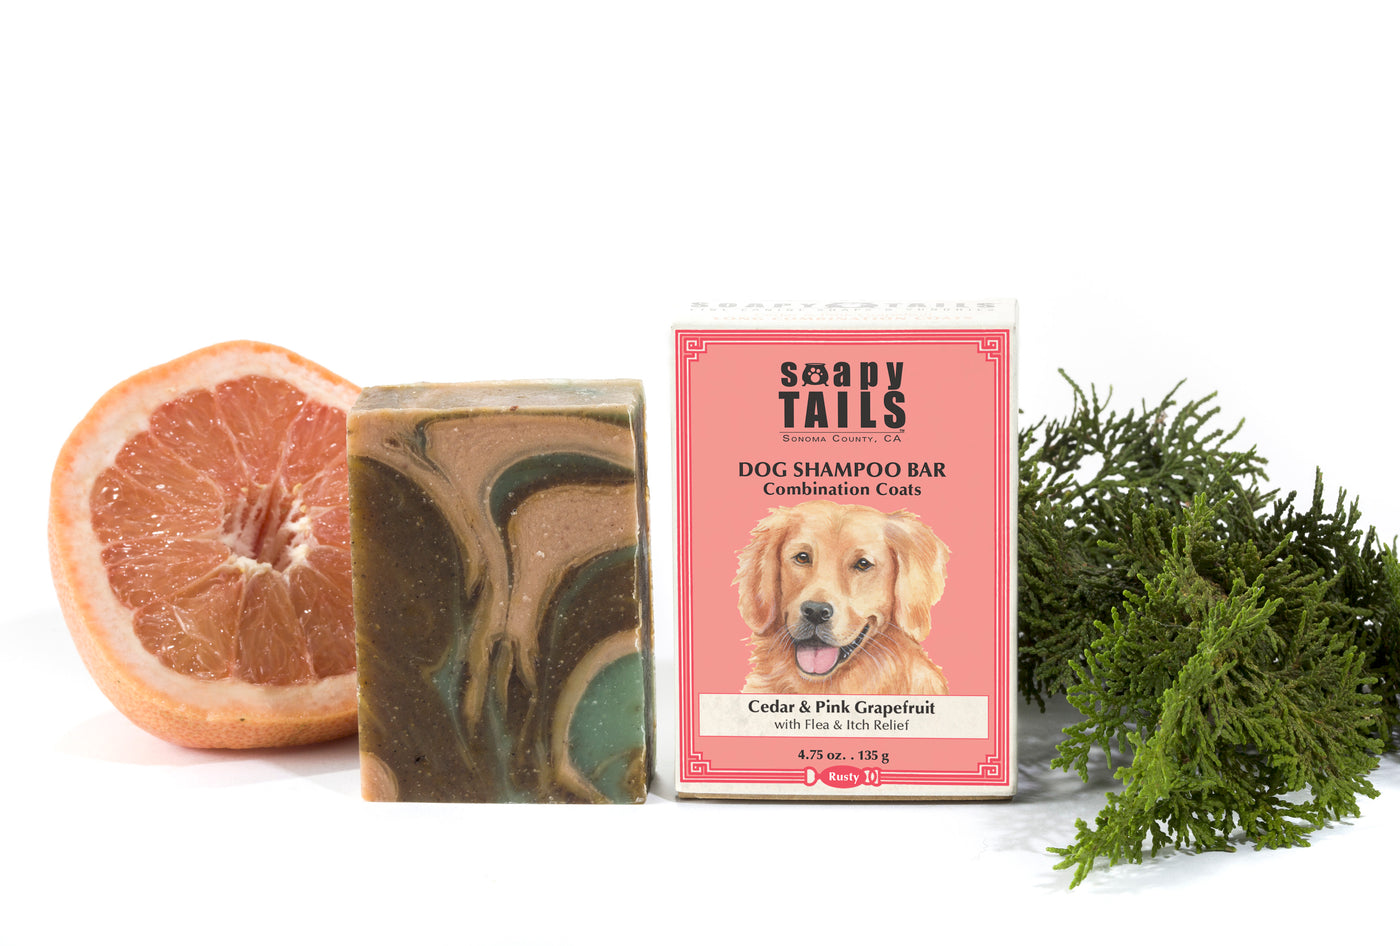 Cedar & Pink Grapefruit Dog Shampoo Bar for Combination Coats 4.75 oz